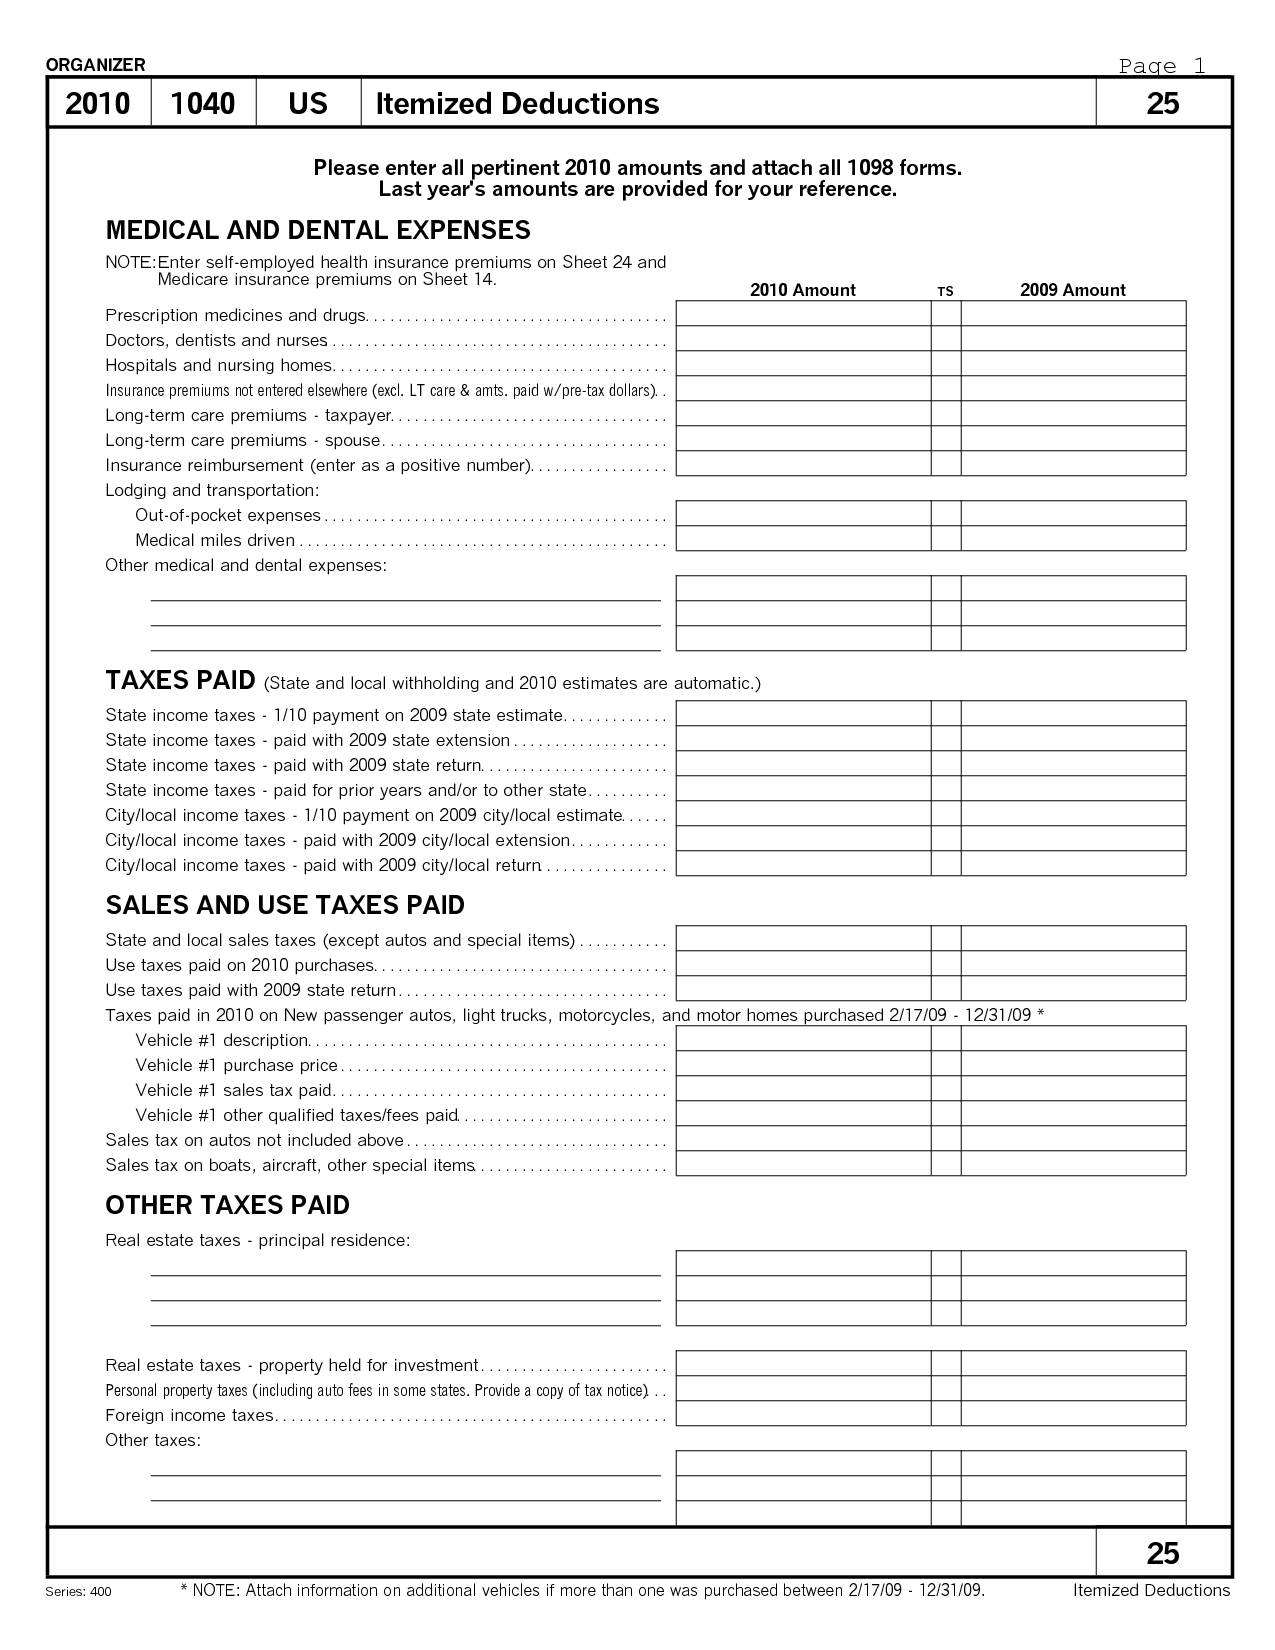 8 Tax Preparation Organizer Worksheet /